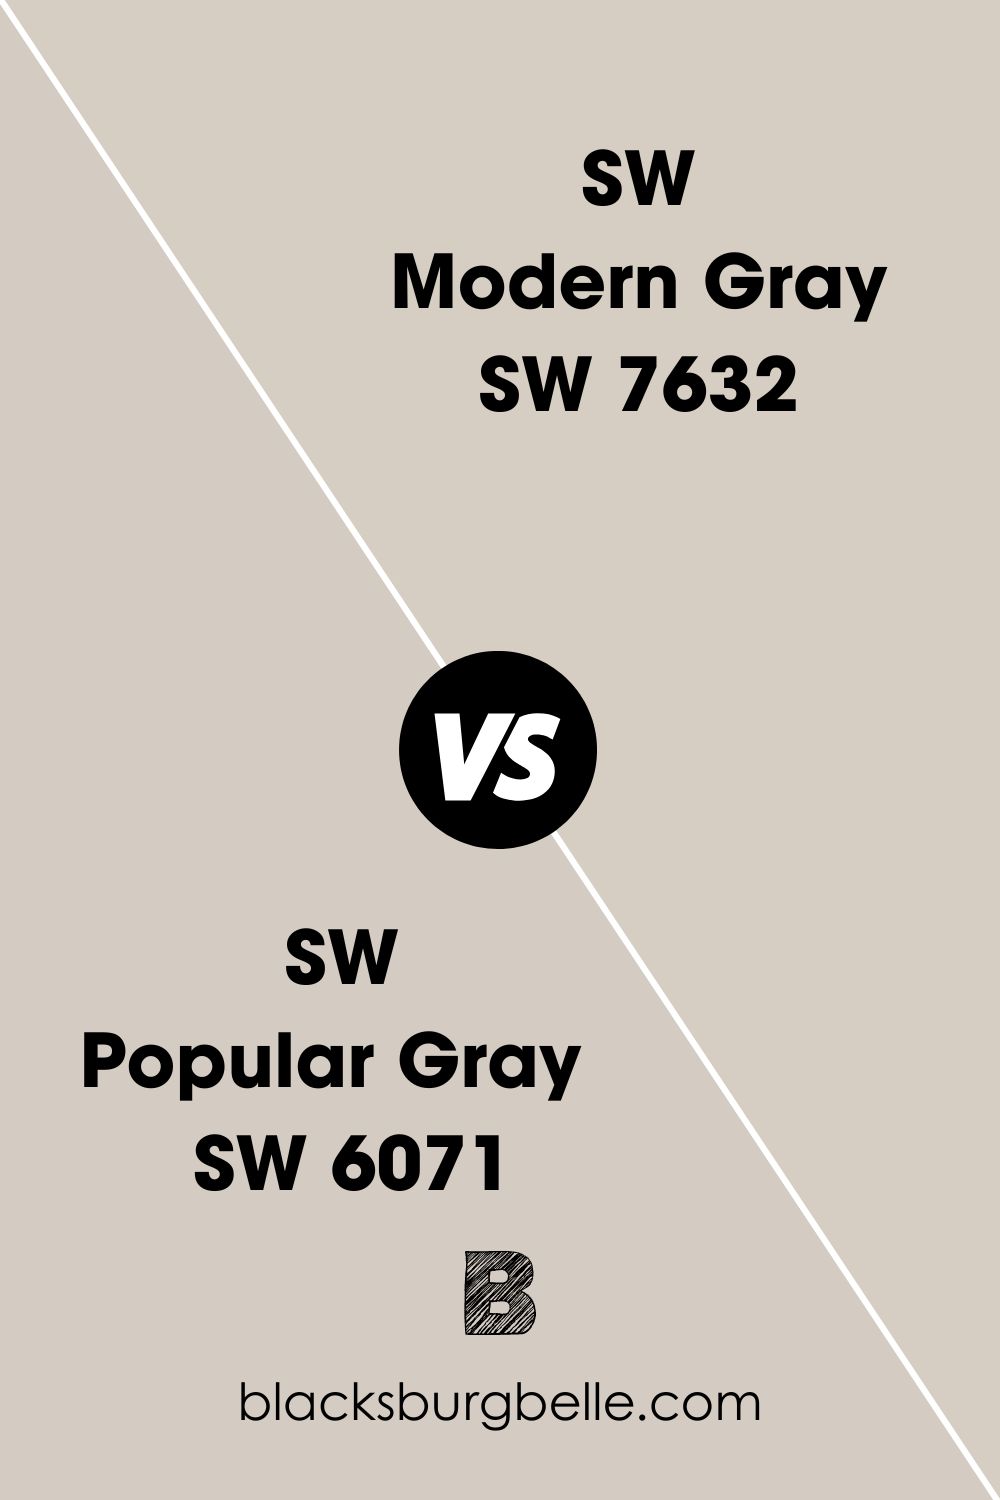 SW Modern Gray vs SW Popular Gray